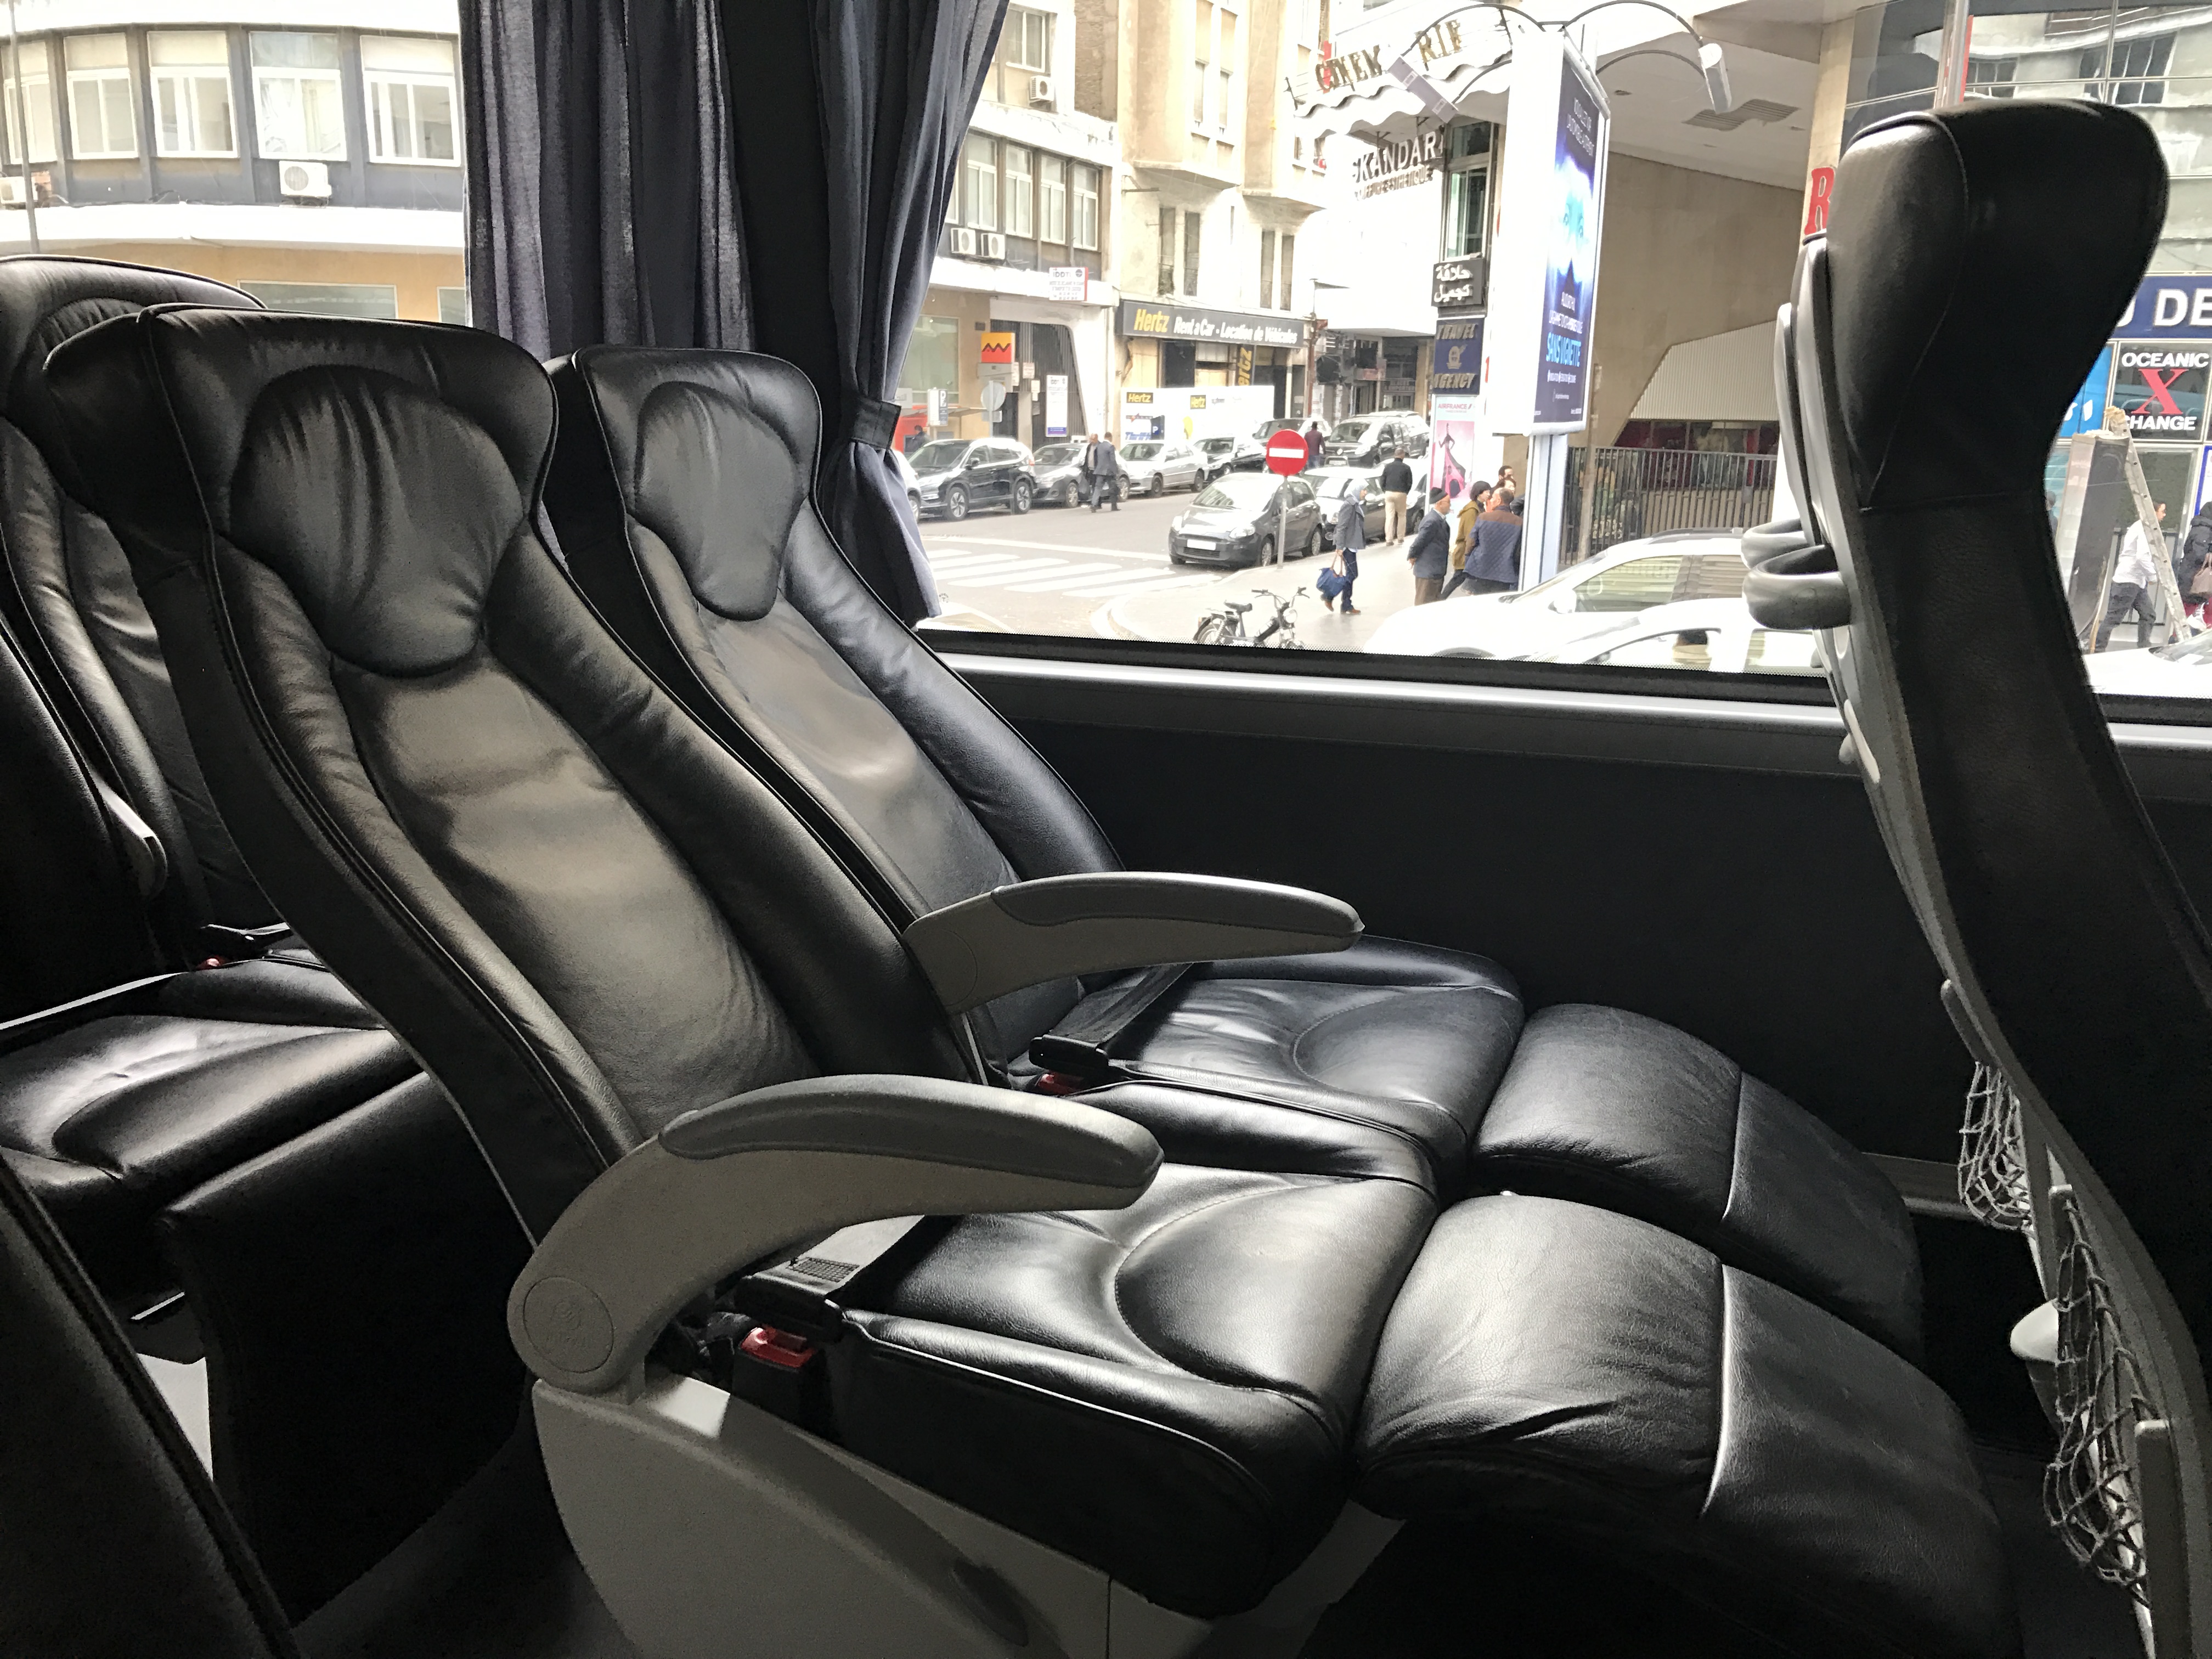 Bus seats. Premium Seat Headrest Tobacco(2k011-128-114).